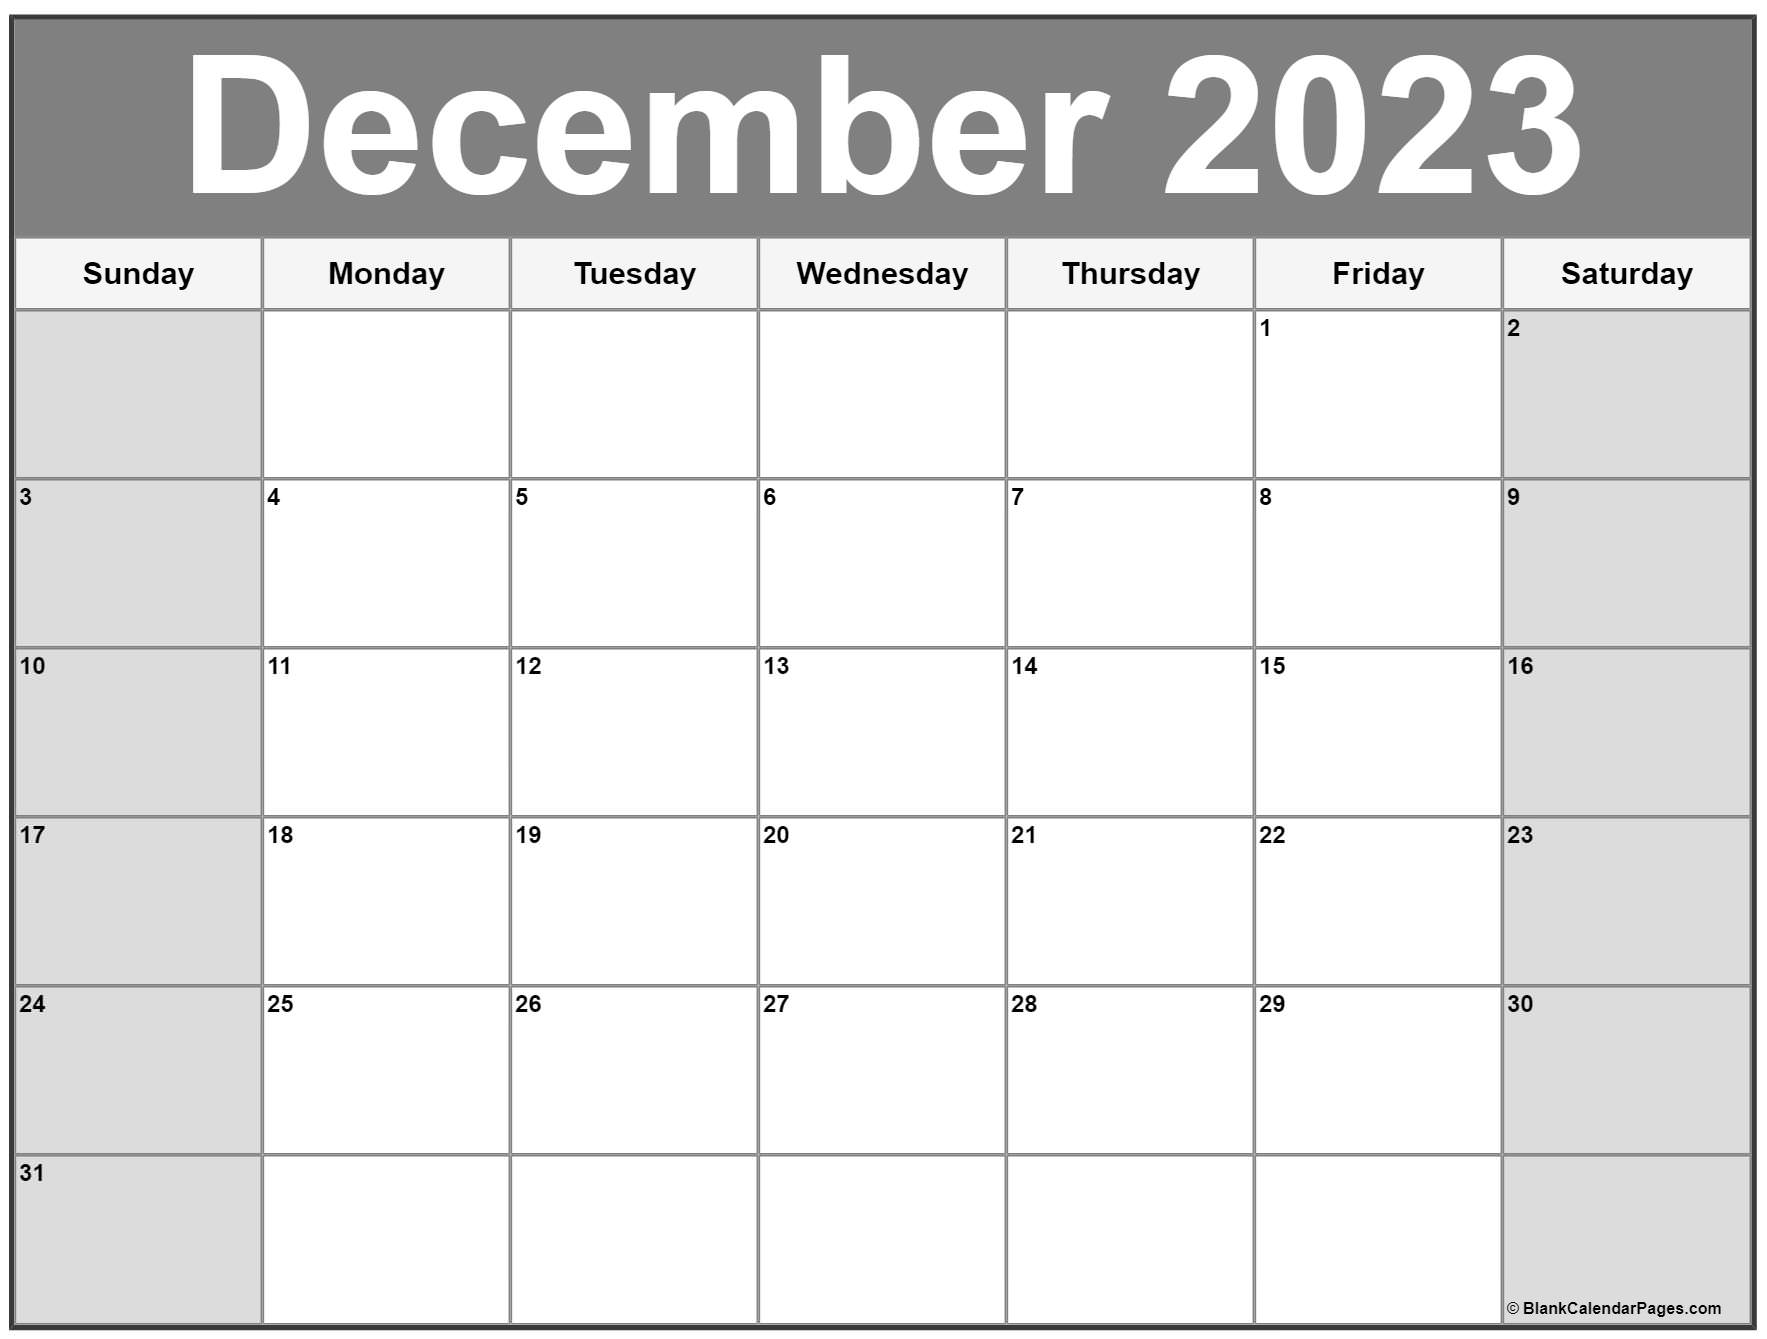 december-2023-monday-calendar-monday-to-sunday-december-2023-monday-calendar-monday-to-sunday